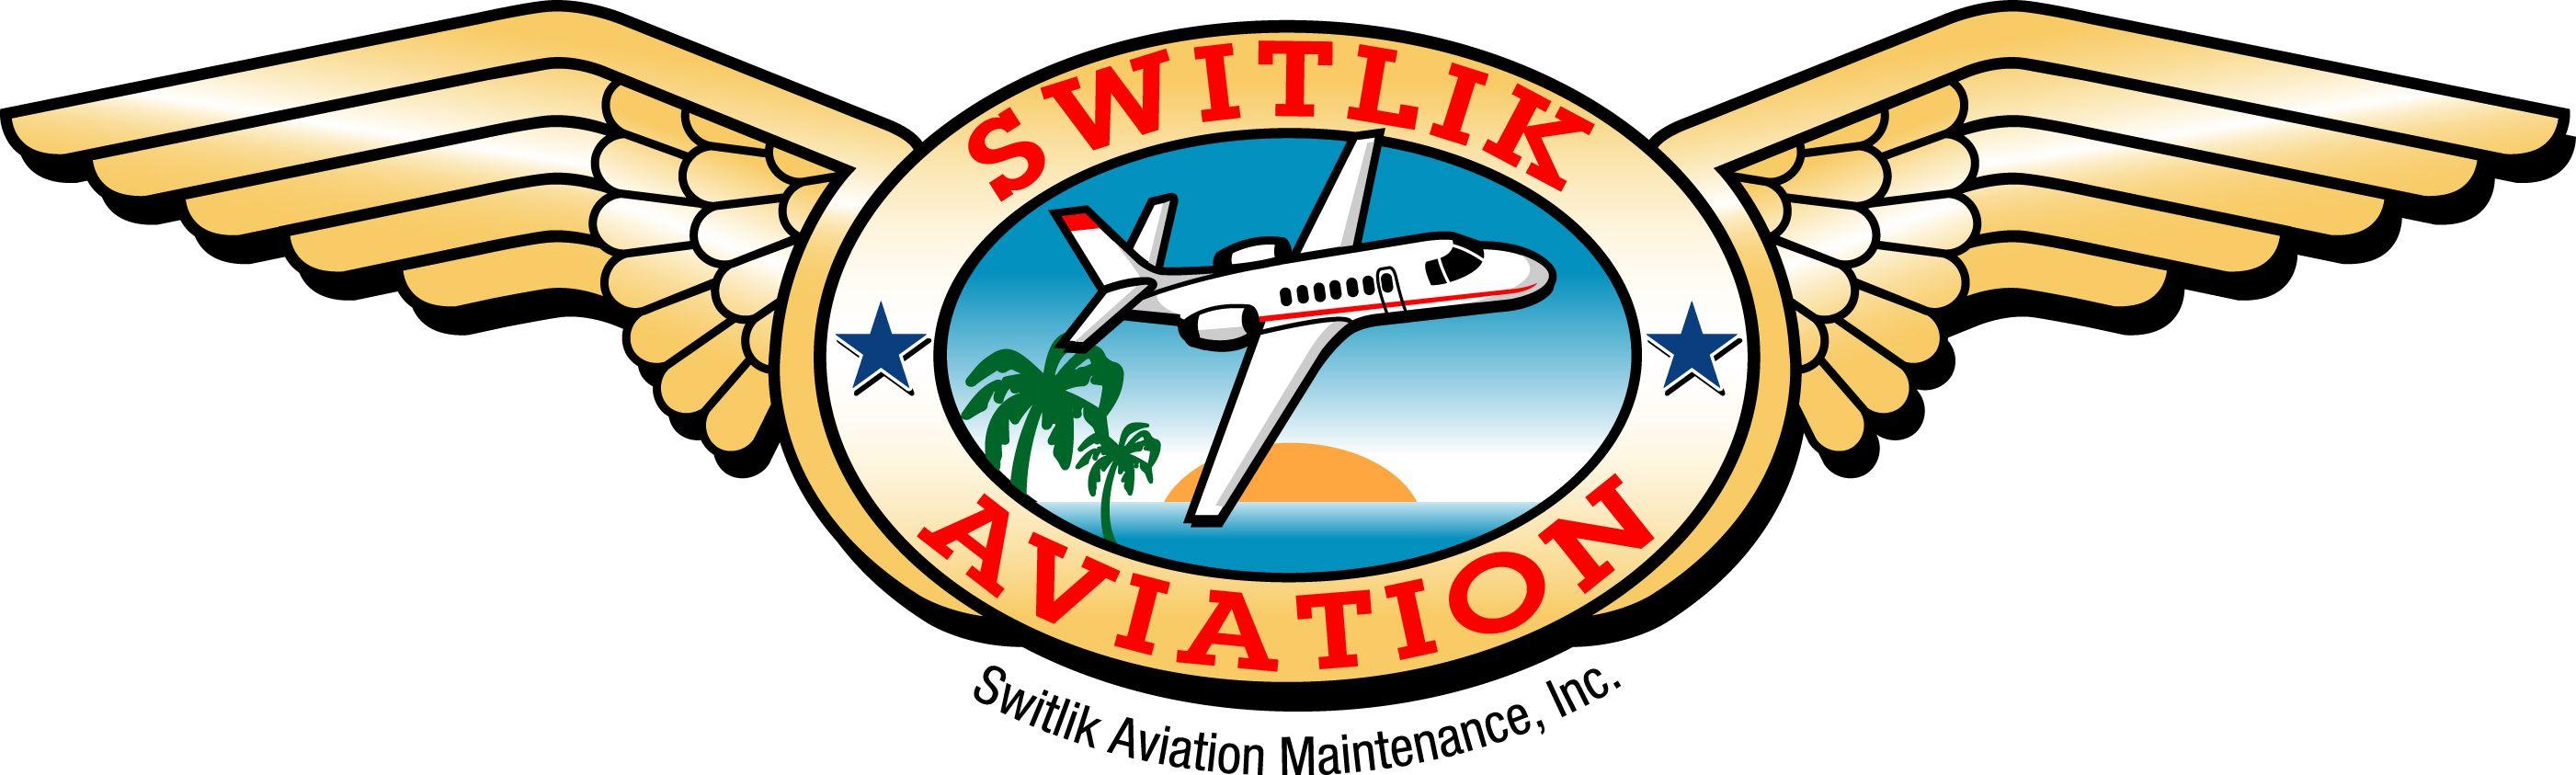 Aircraft Mechanic Logo - Page Field | Aircraft Repair